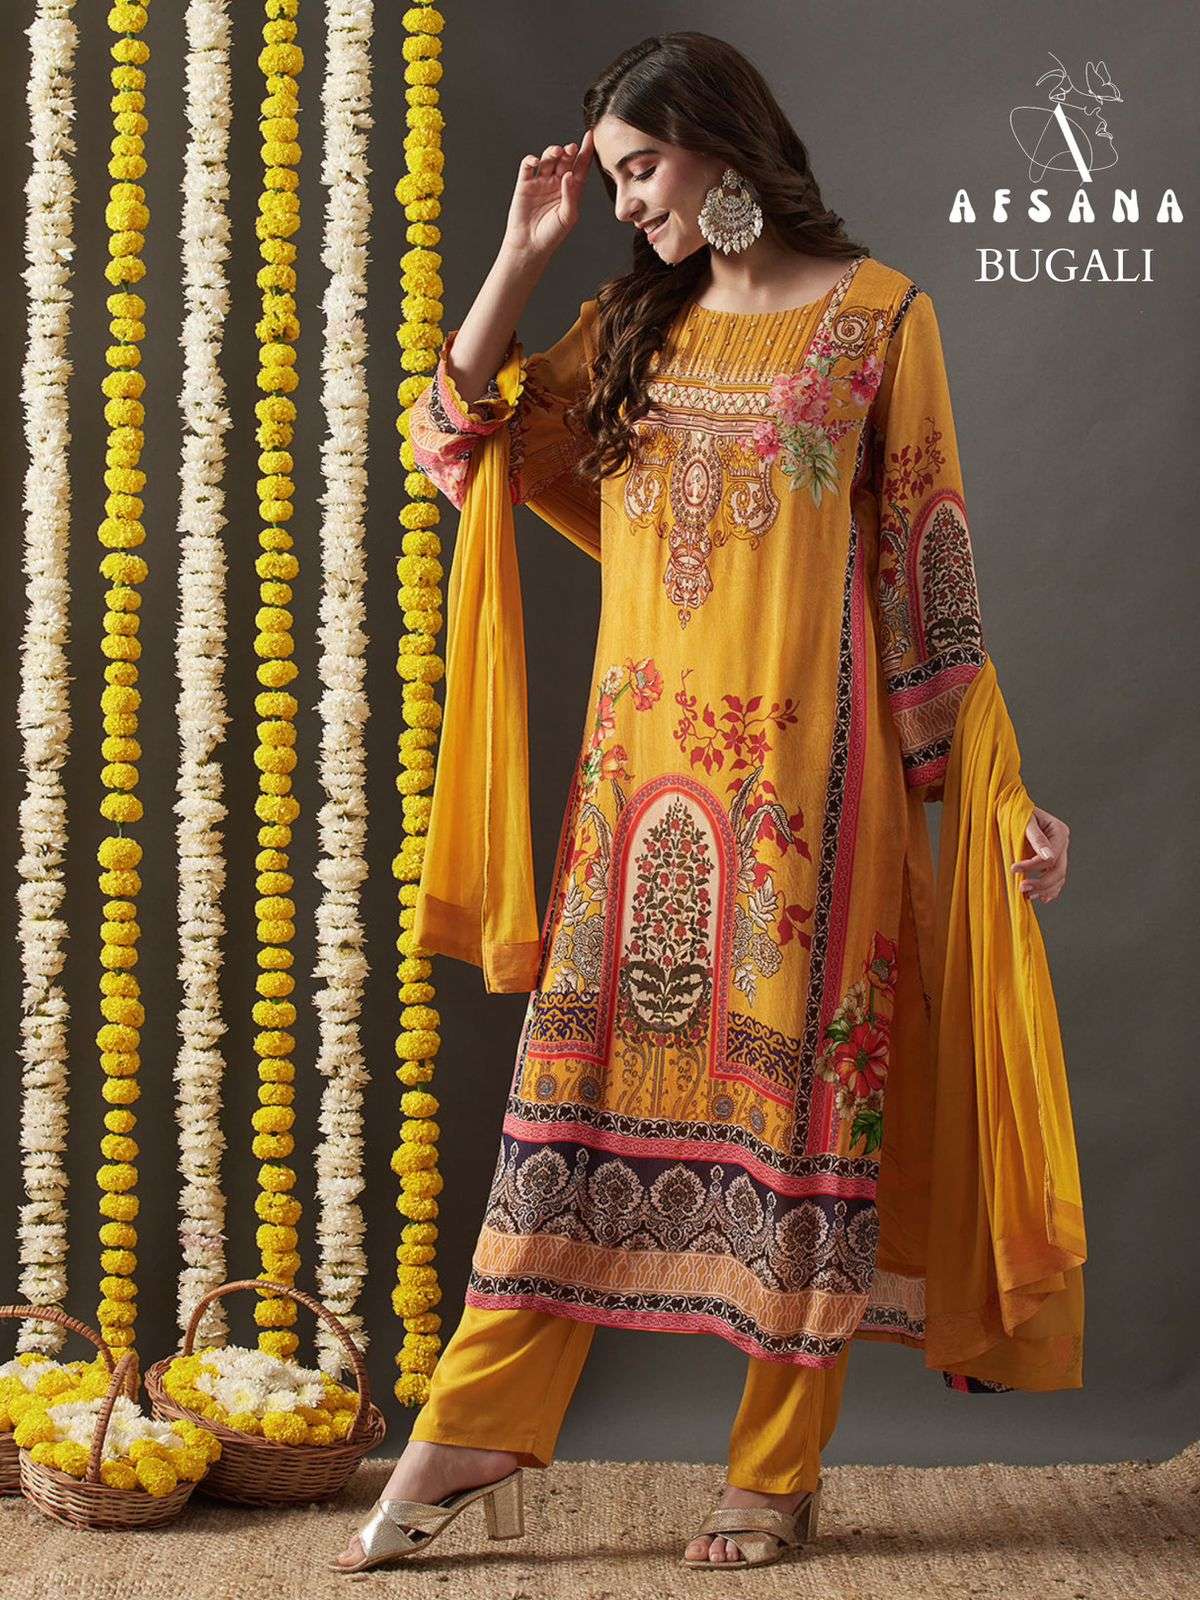 Afsana Bugali Digital Print Cotton Dress Pakistani Designs